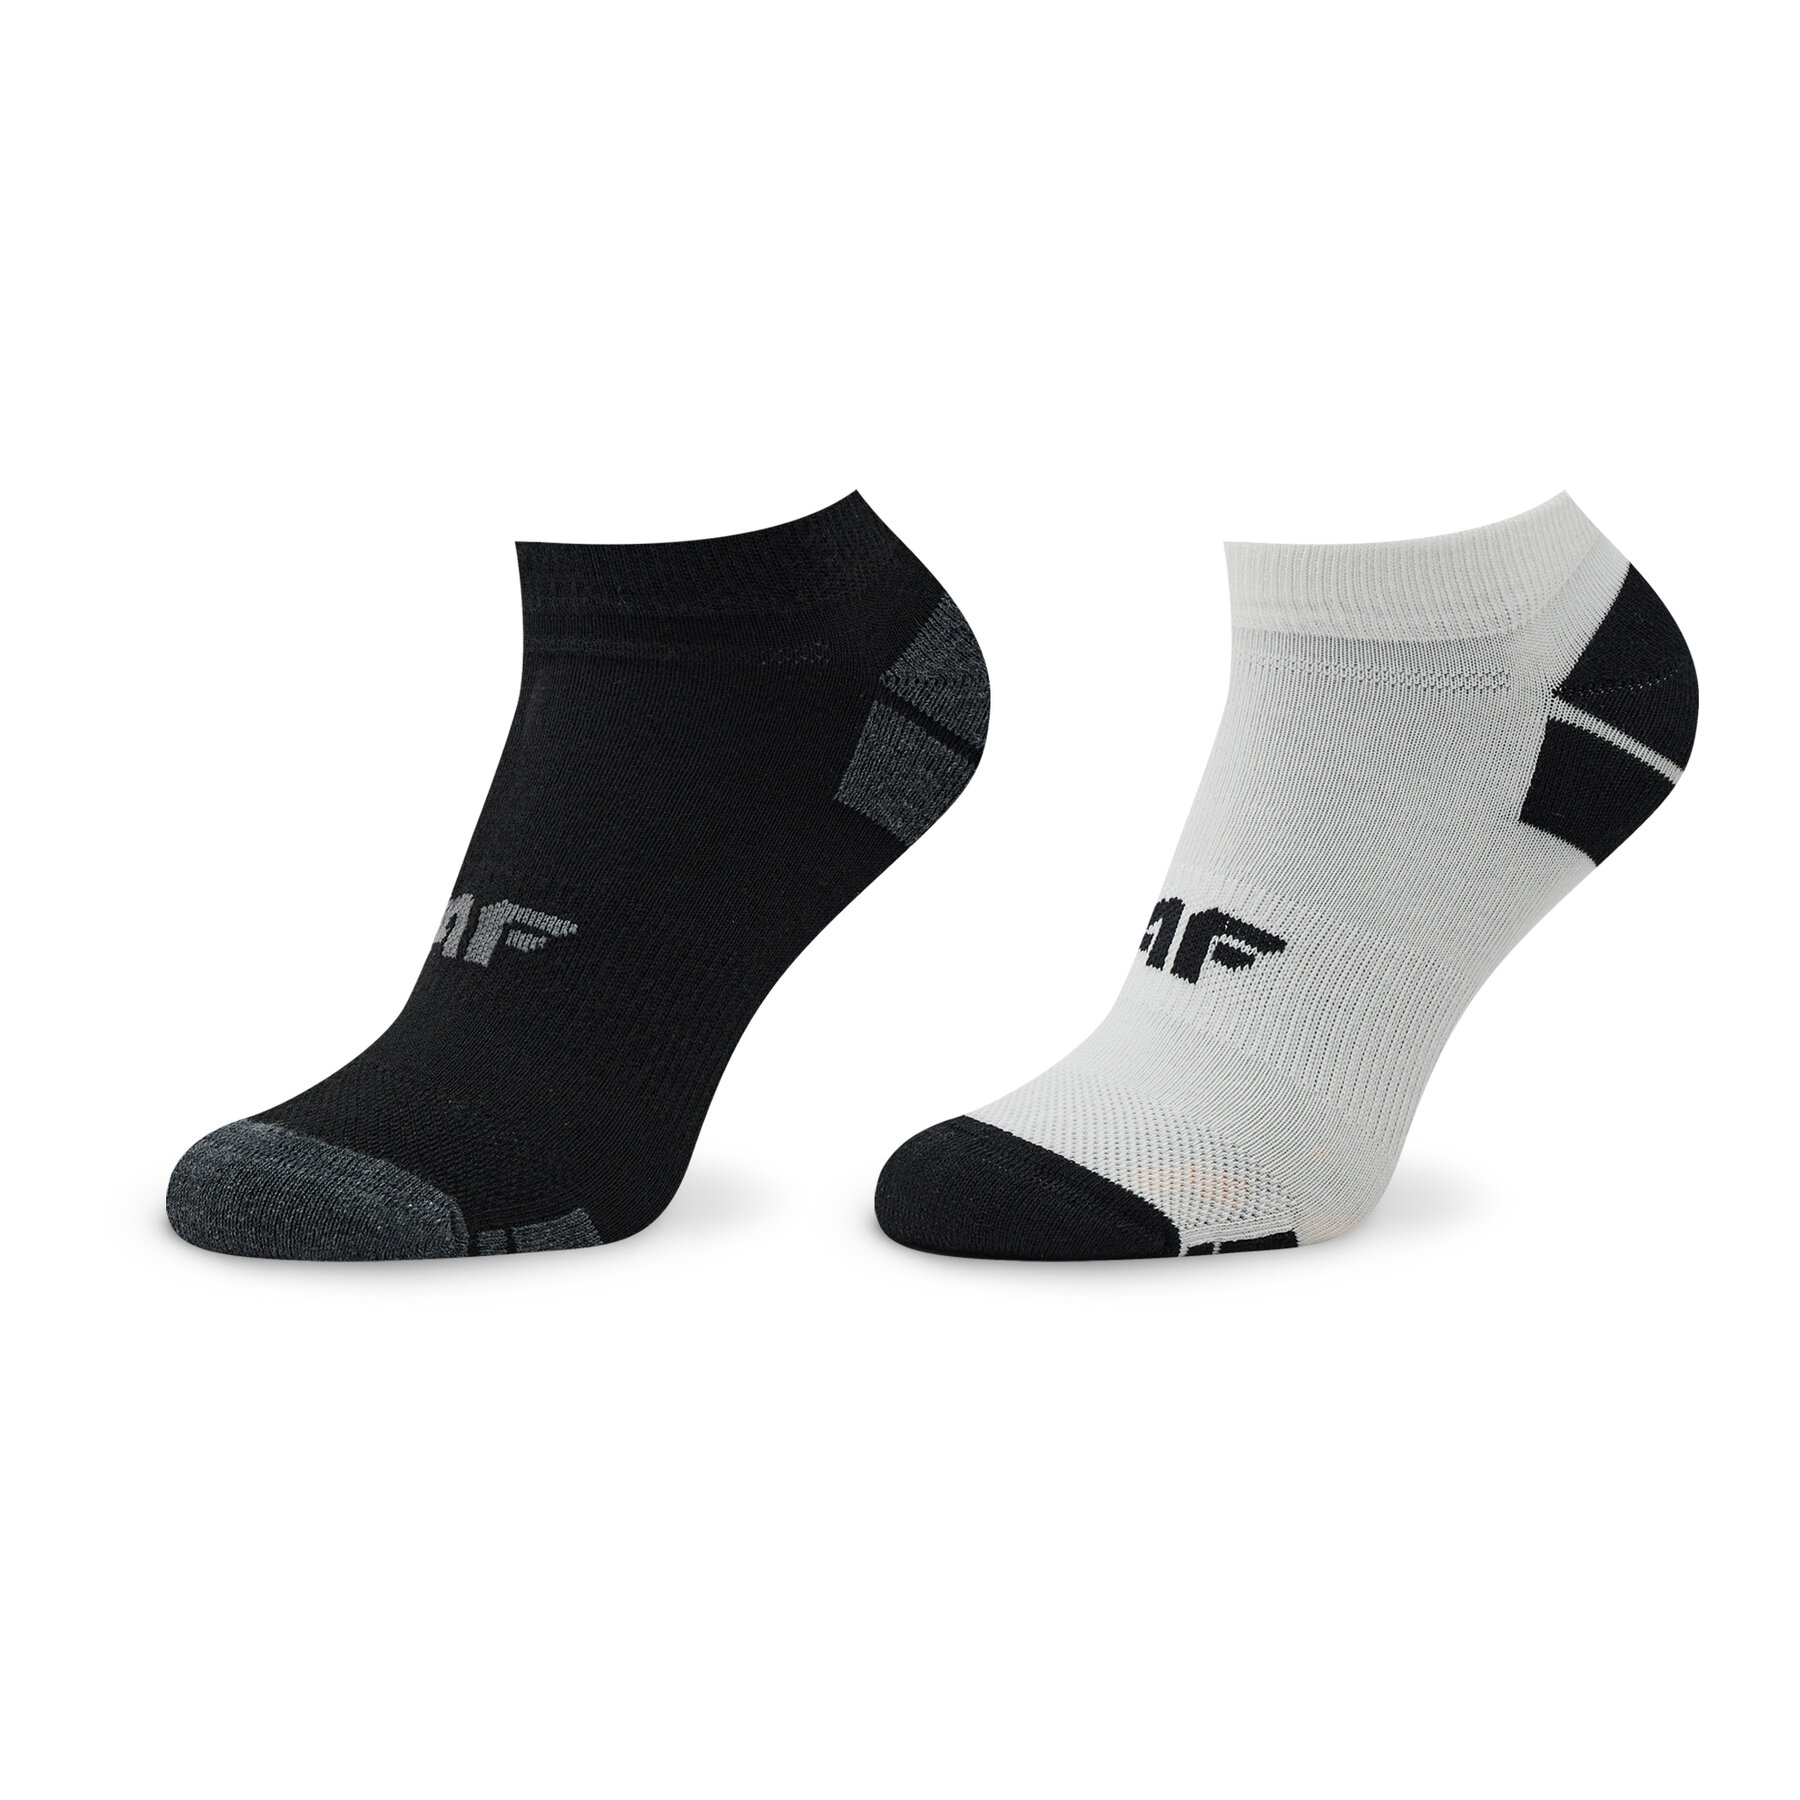 Vyriškų trumpų kojinių komplektas (2 poros) 4F H4Z22-SOM002 90S